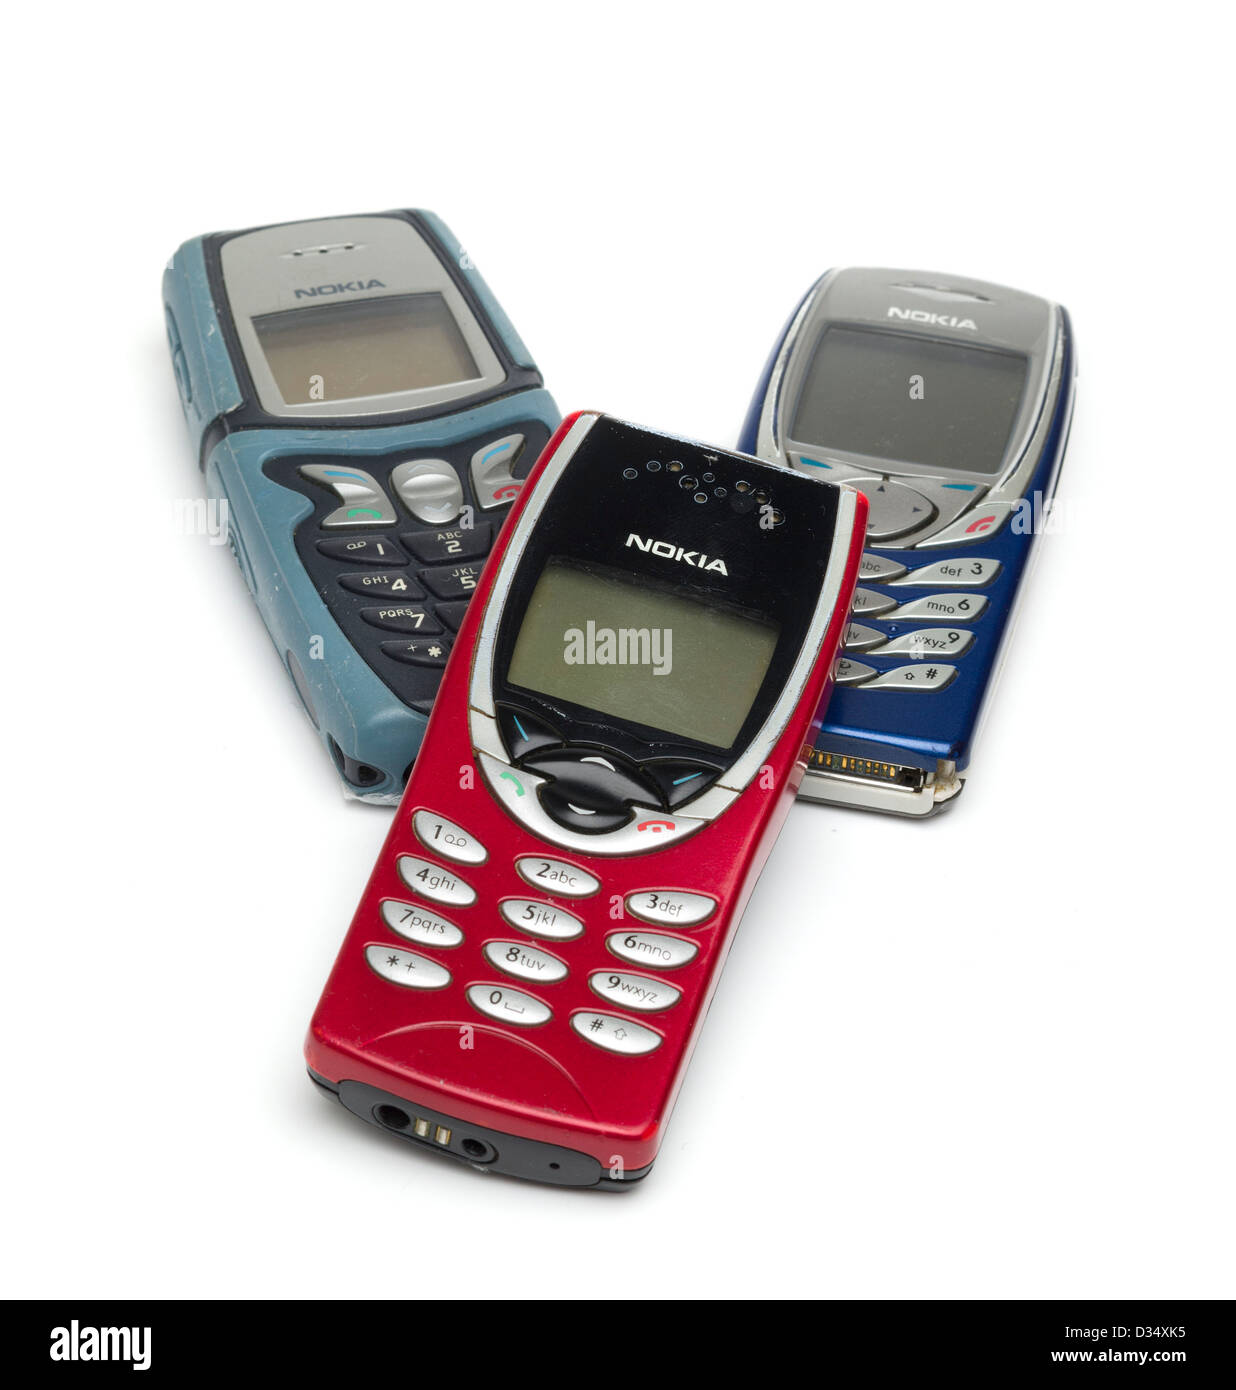 Nokia nokia phones old immagini e fotografie stock ad alta risoluzione -  Alamy